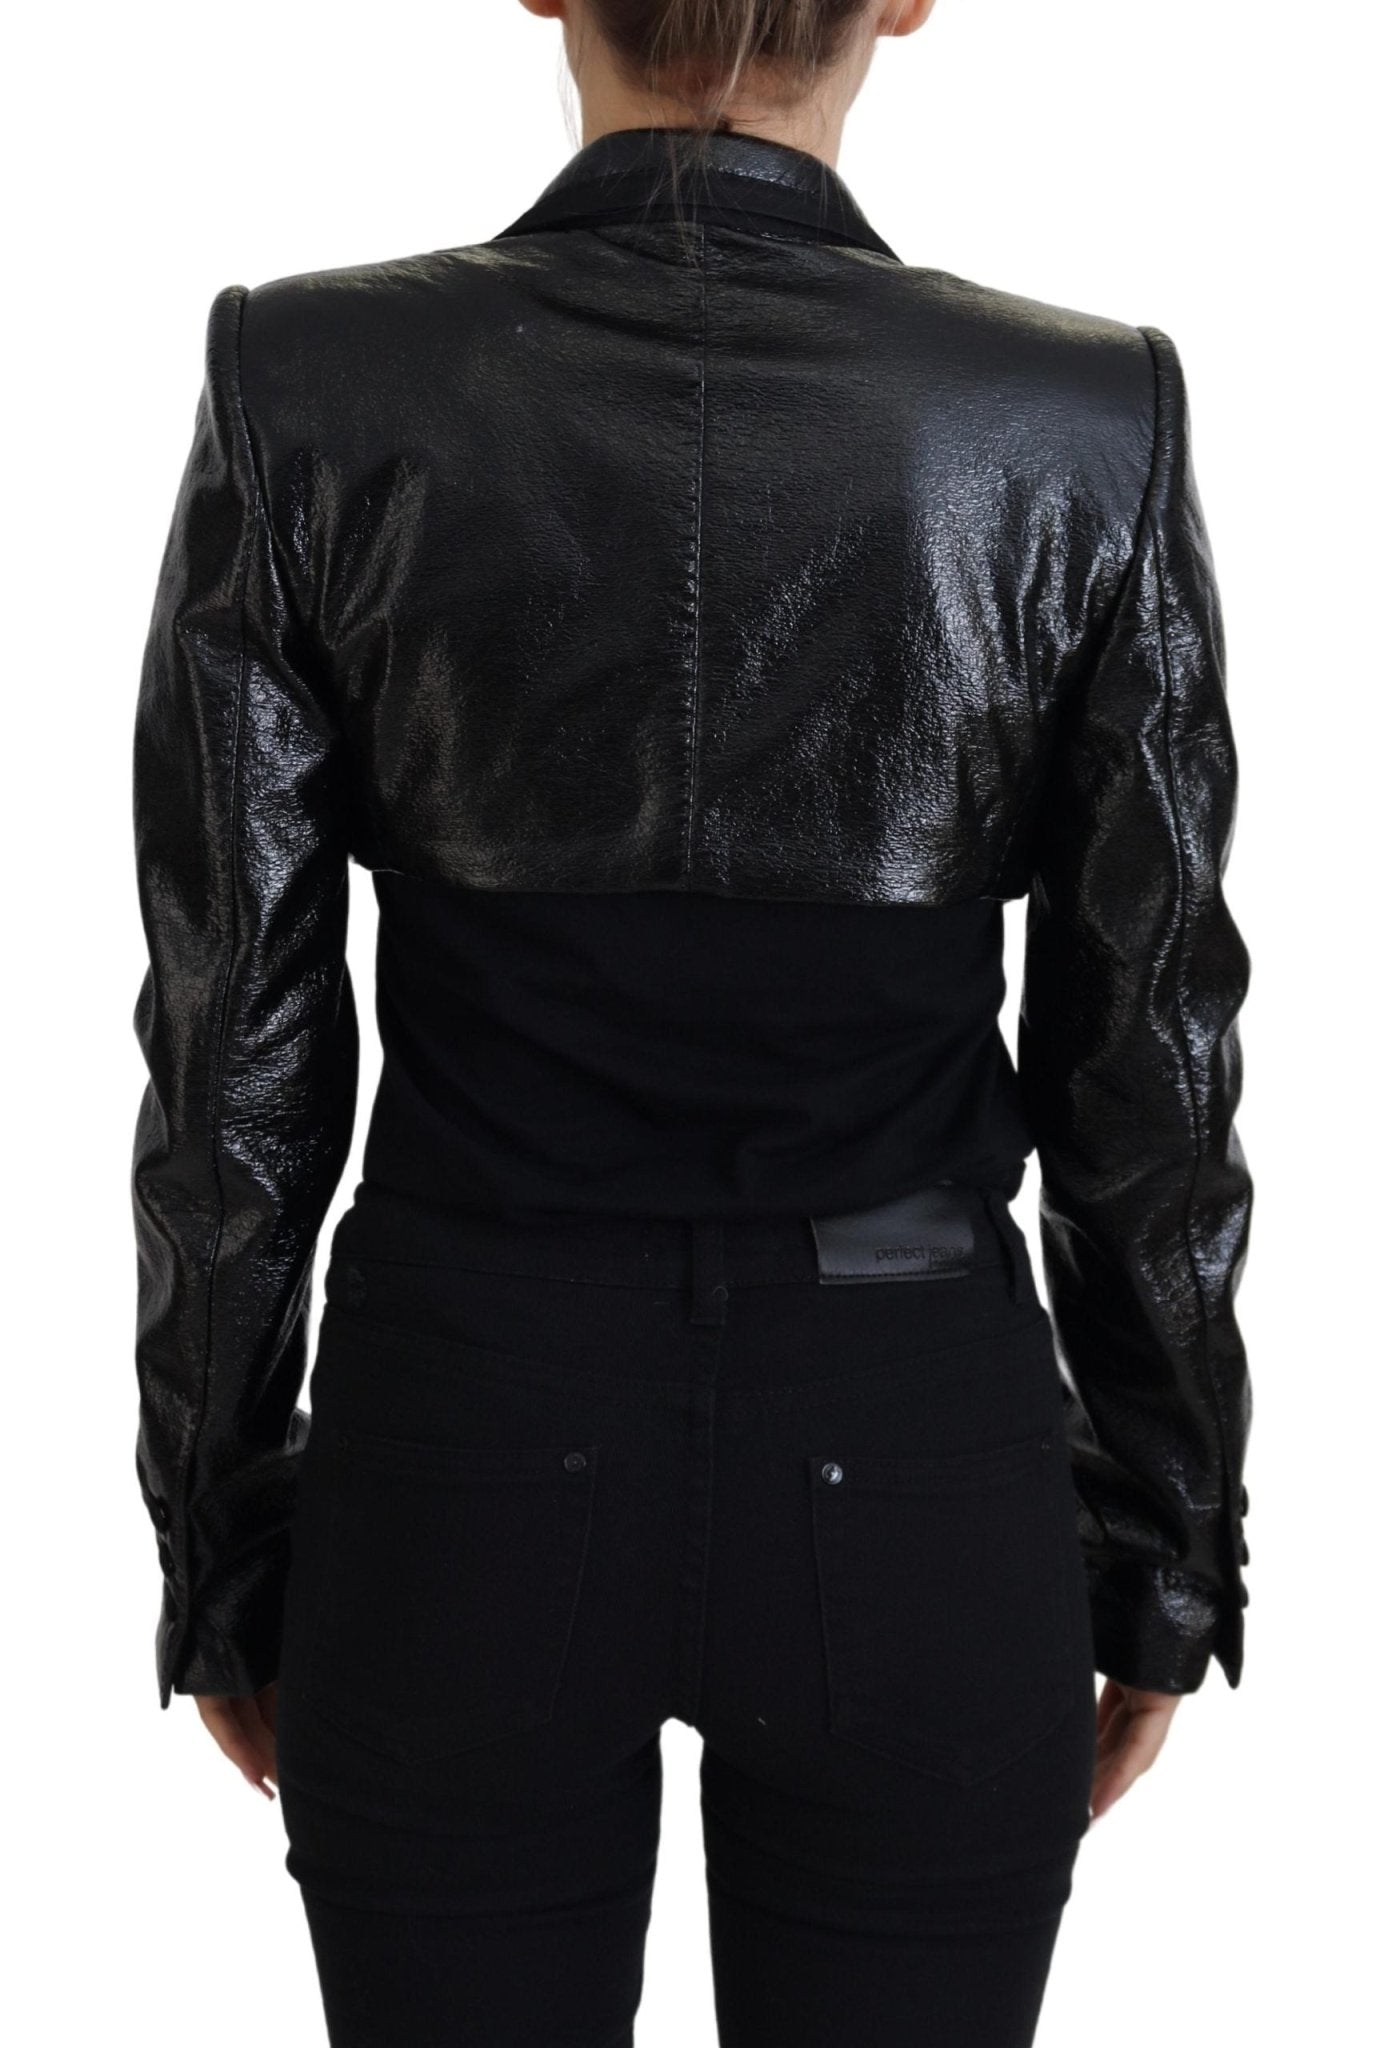 Dolce & Gabbana Black Long Sleeves Crop Blazer Cotton Jacket